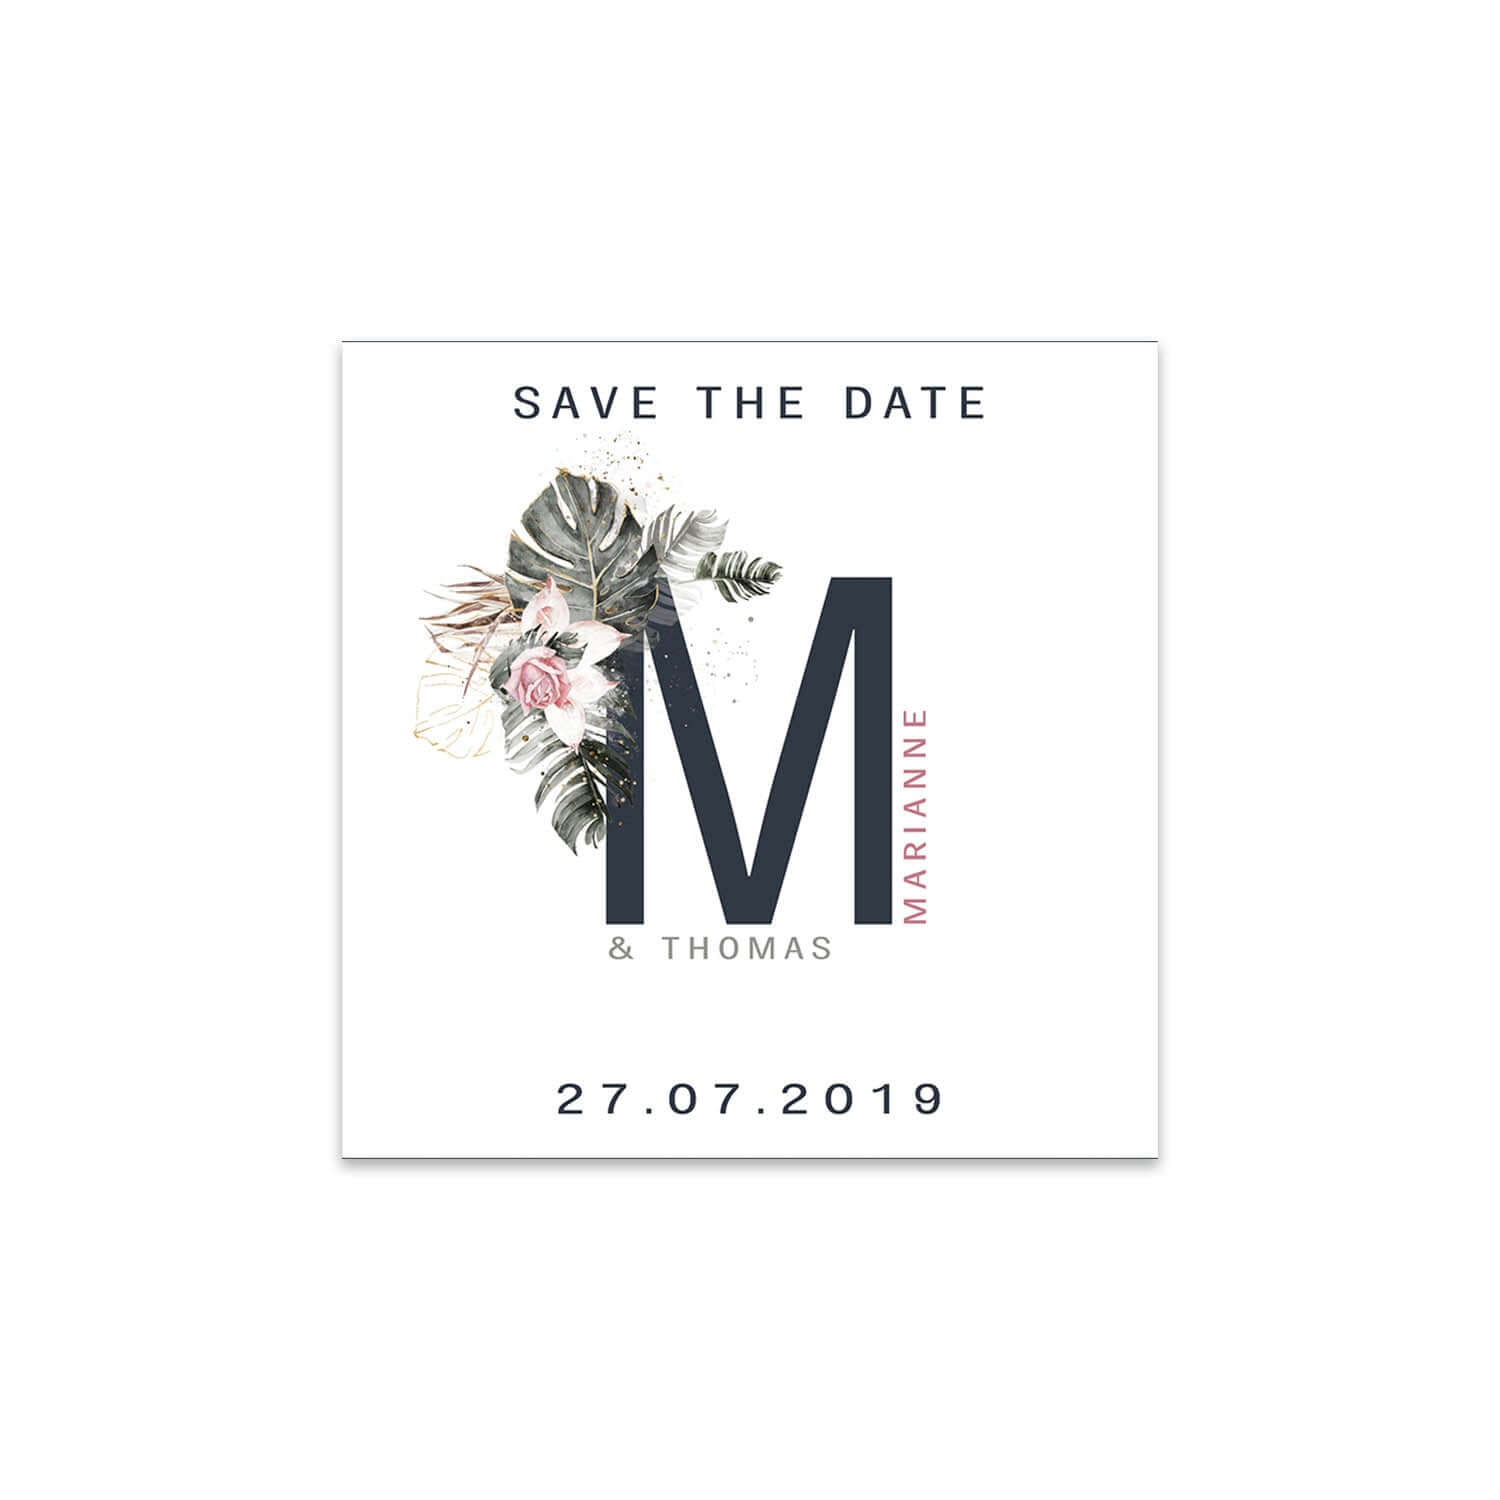 Monogram Save the Date Cards Wedding Stationery Mustard and Gray Ltd Shropshire UK